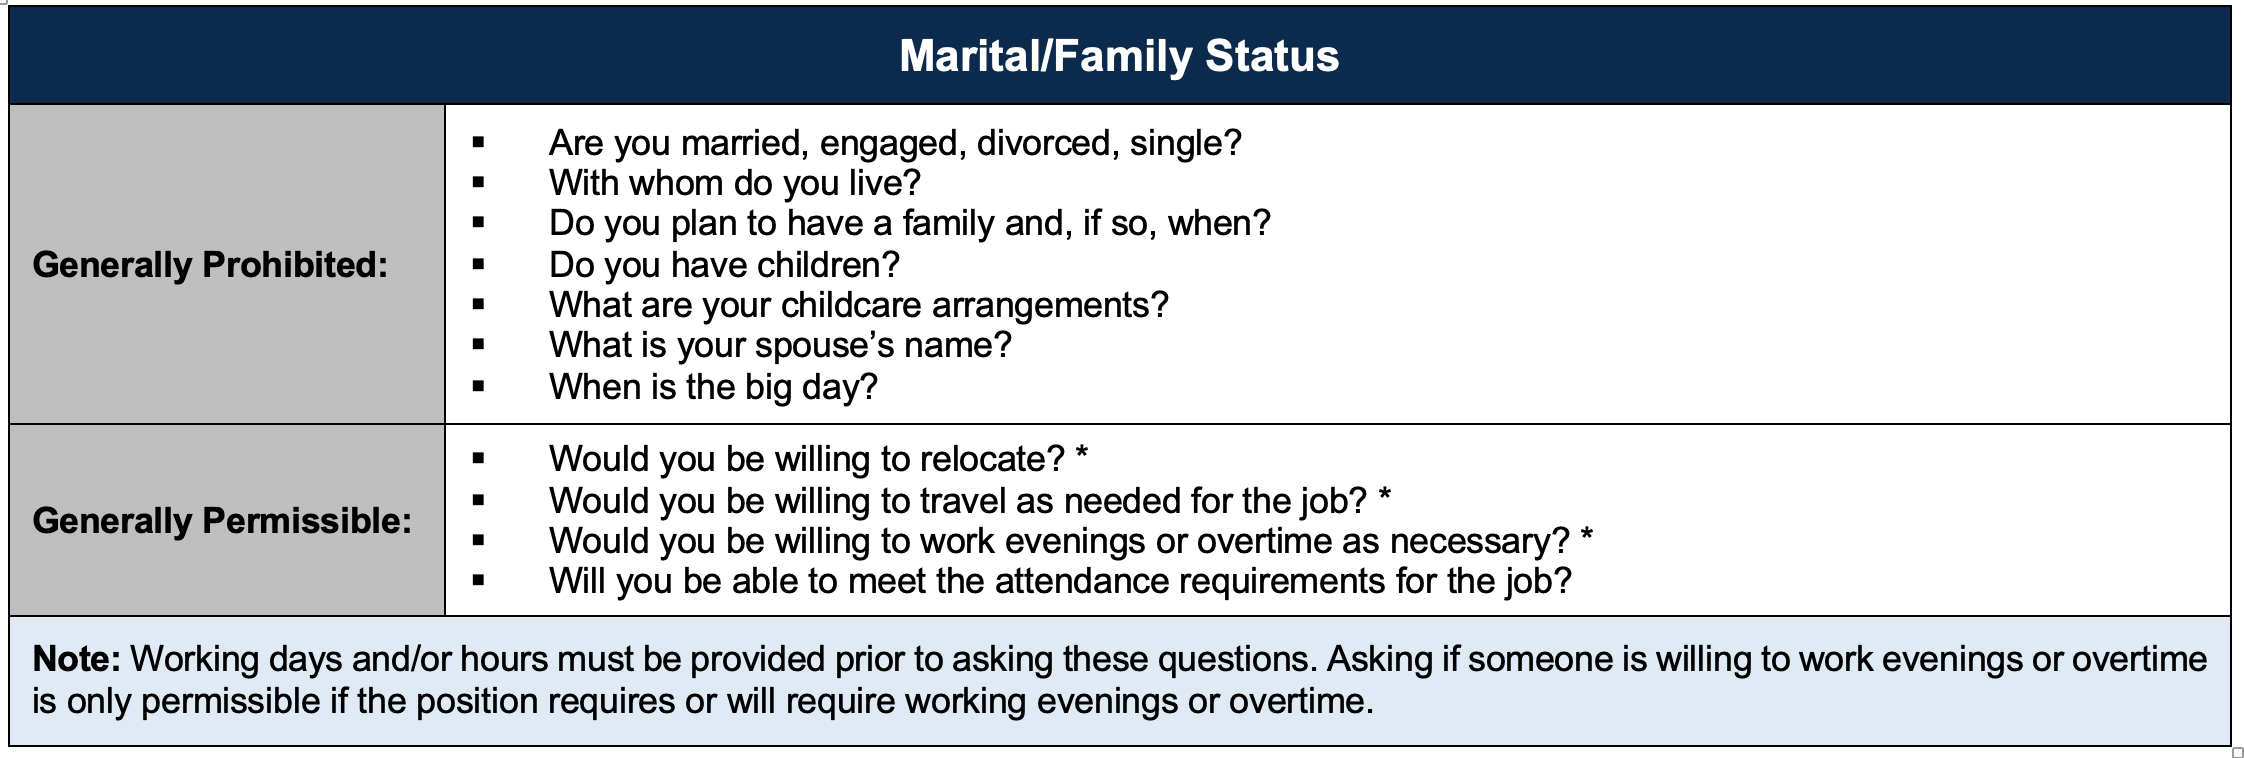 Marital:Family Status